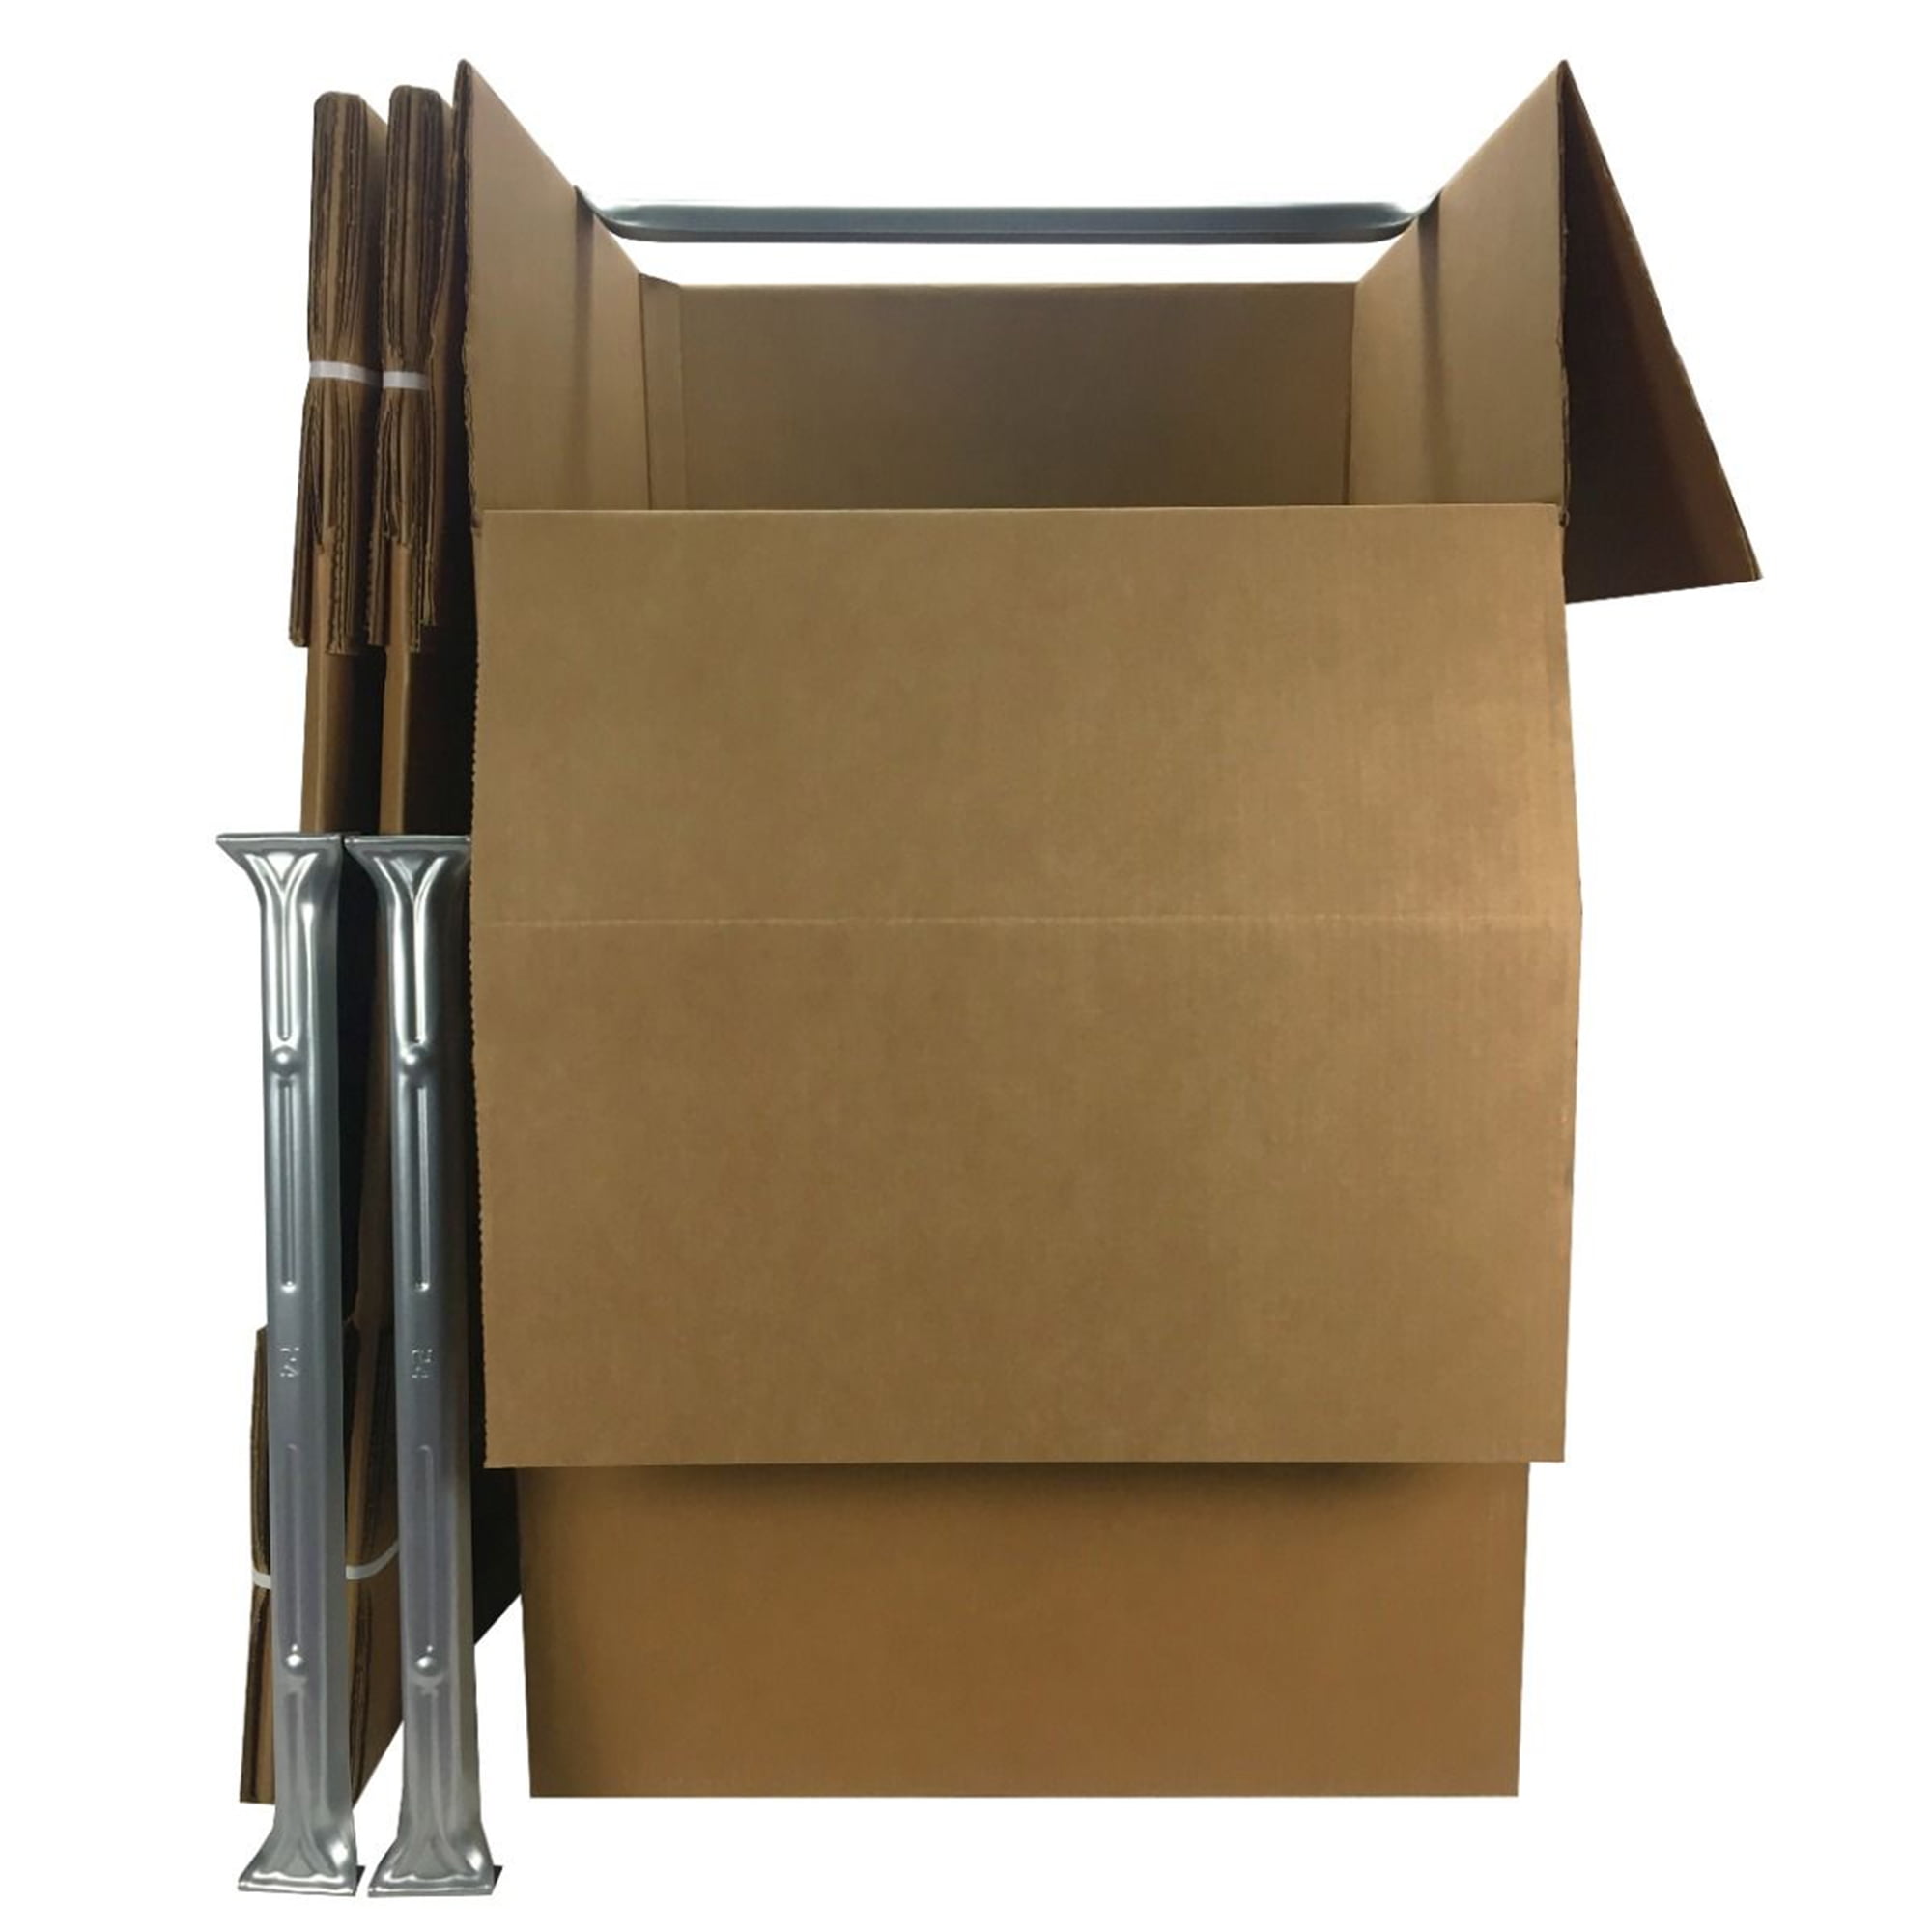 3 PK Shorty Space Savers - Uboxes Wardrobe Moving Boxes 20x20x34 w/Bars 